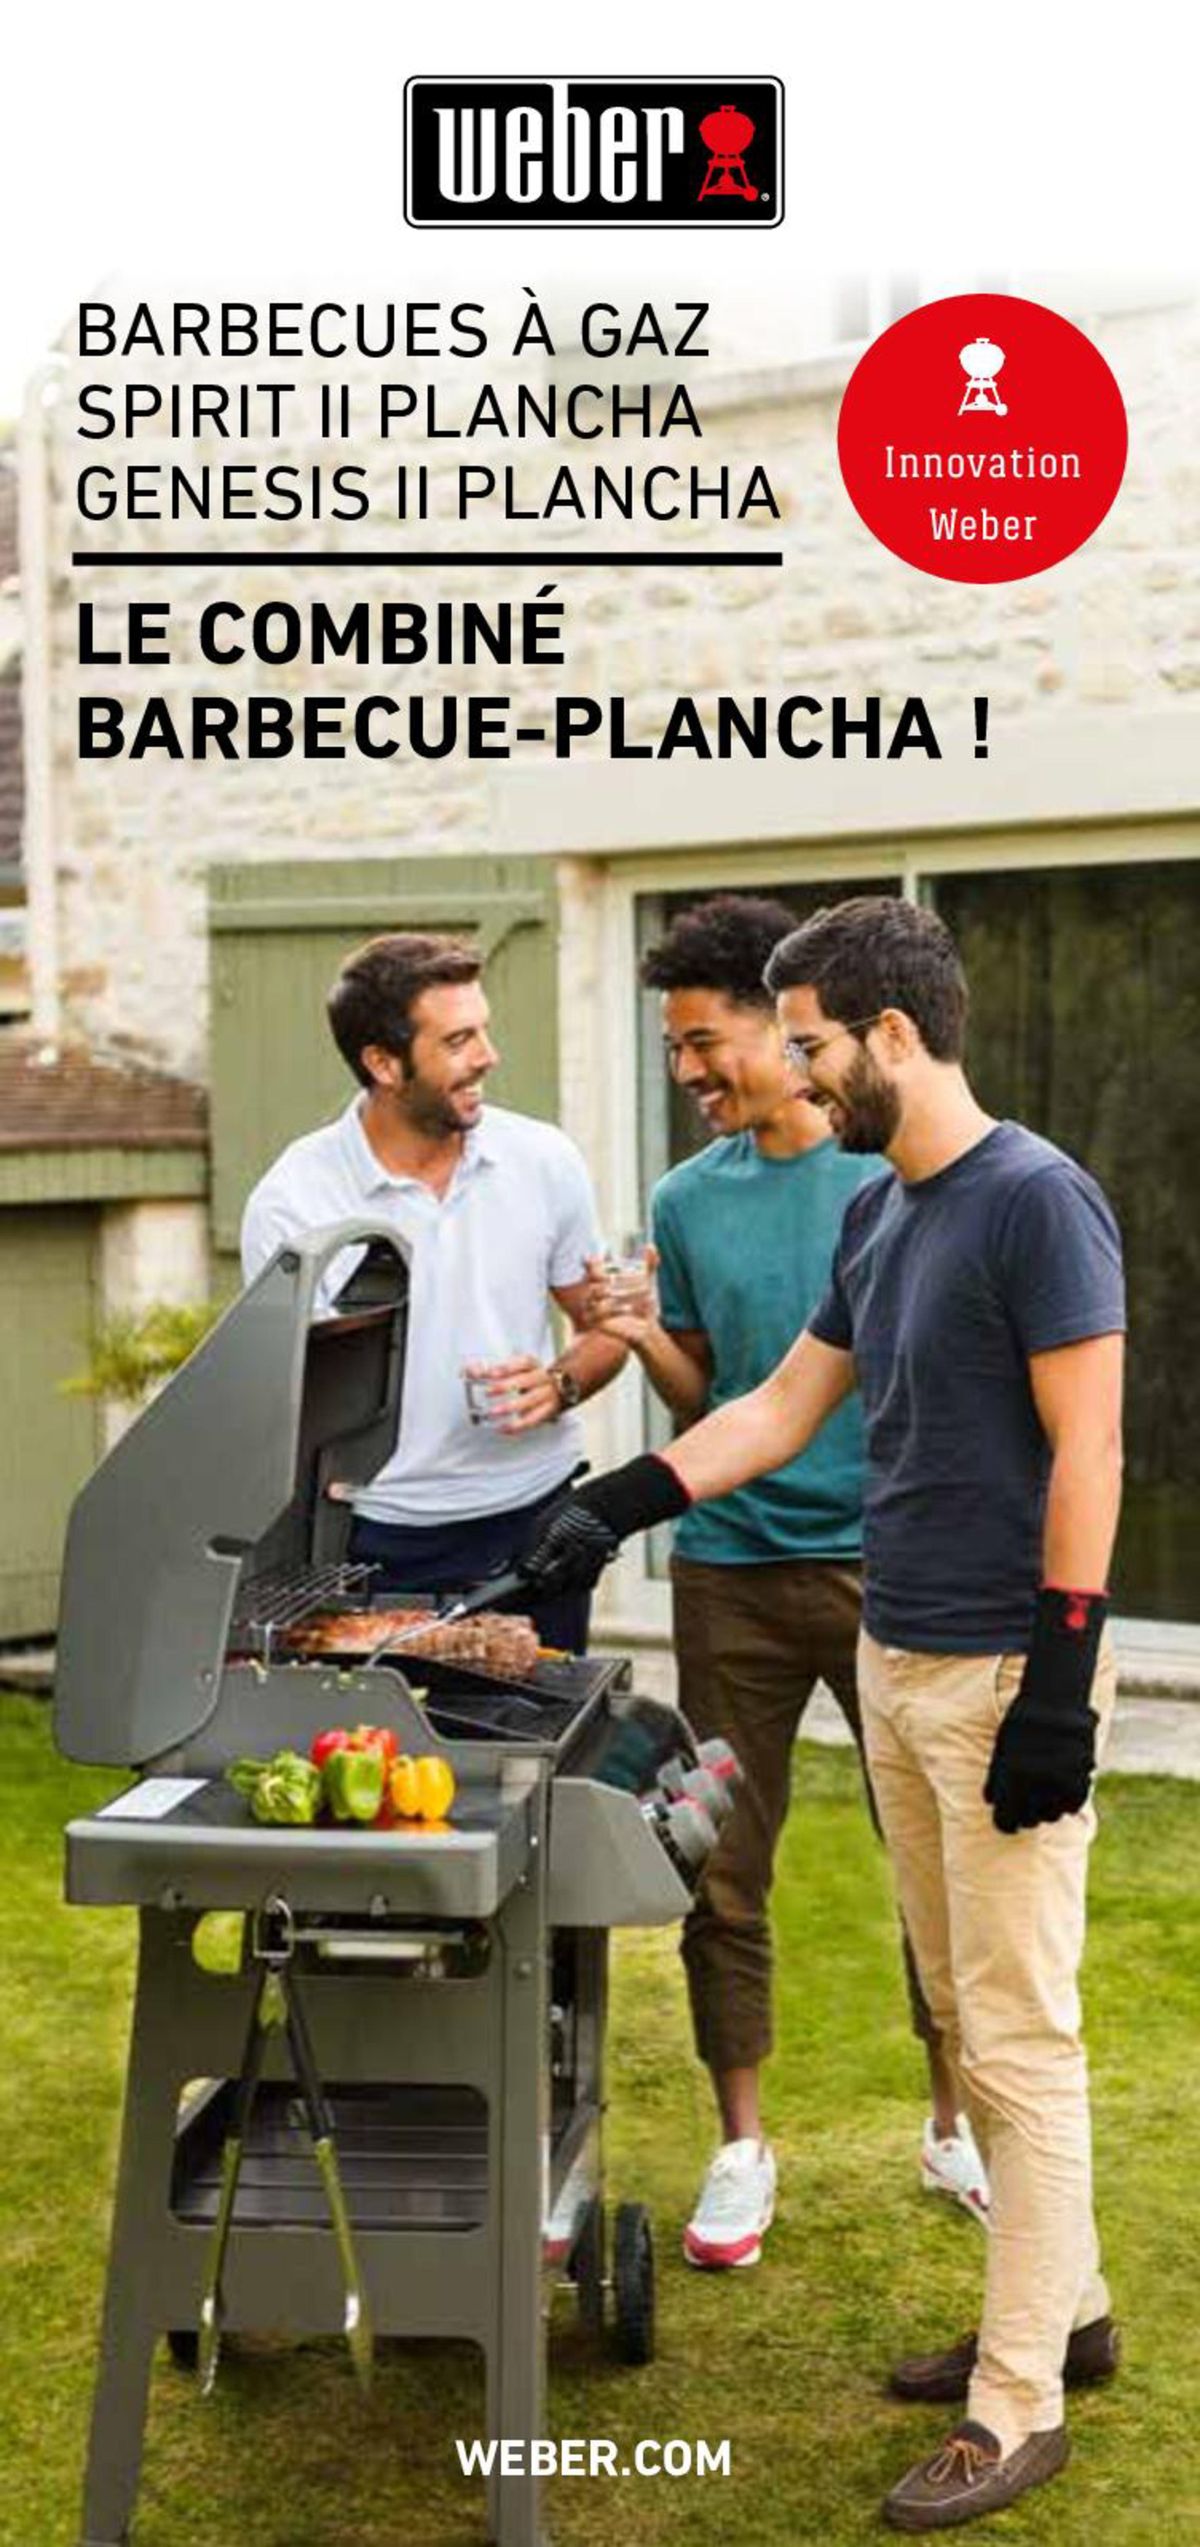 Catalogue Le combine barbecue-plancha !, page 00001